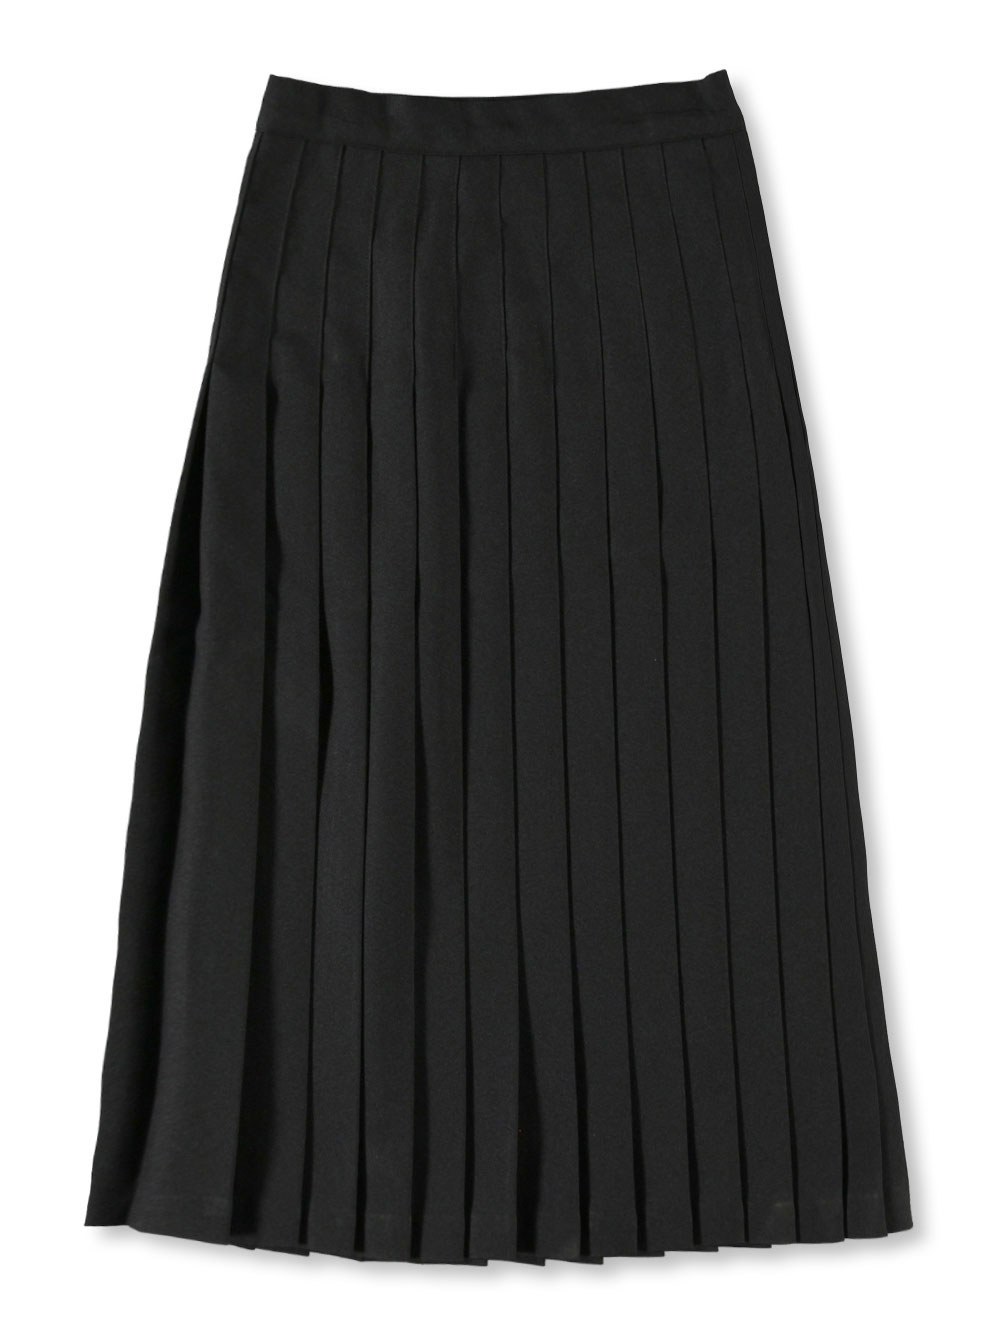 Cookie's Brand Big Girls' Long Pleated Skirt (Sizes 7 - 16) | eBay